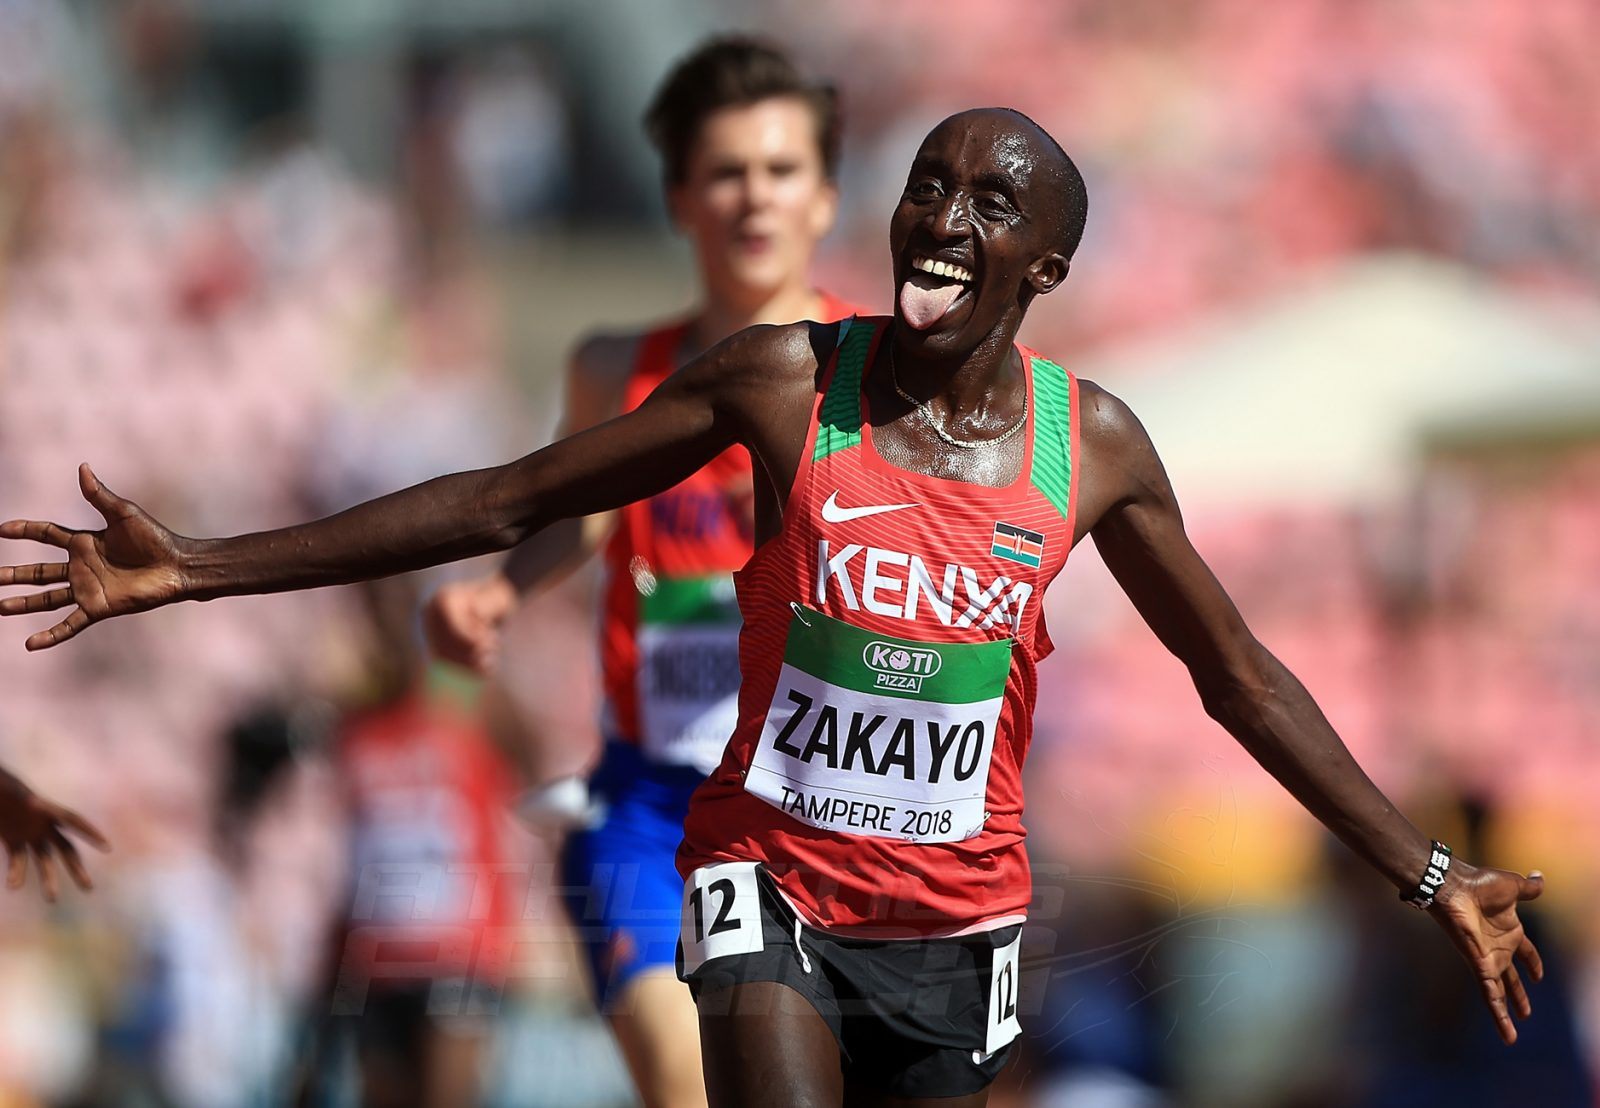 Edward Zakayo of Kenya celebrates winning the 5000m at the IAAF World U20 Championships Tampere 2018 / Photo Credit: Getty Images for IAAF